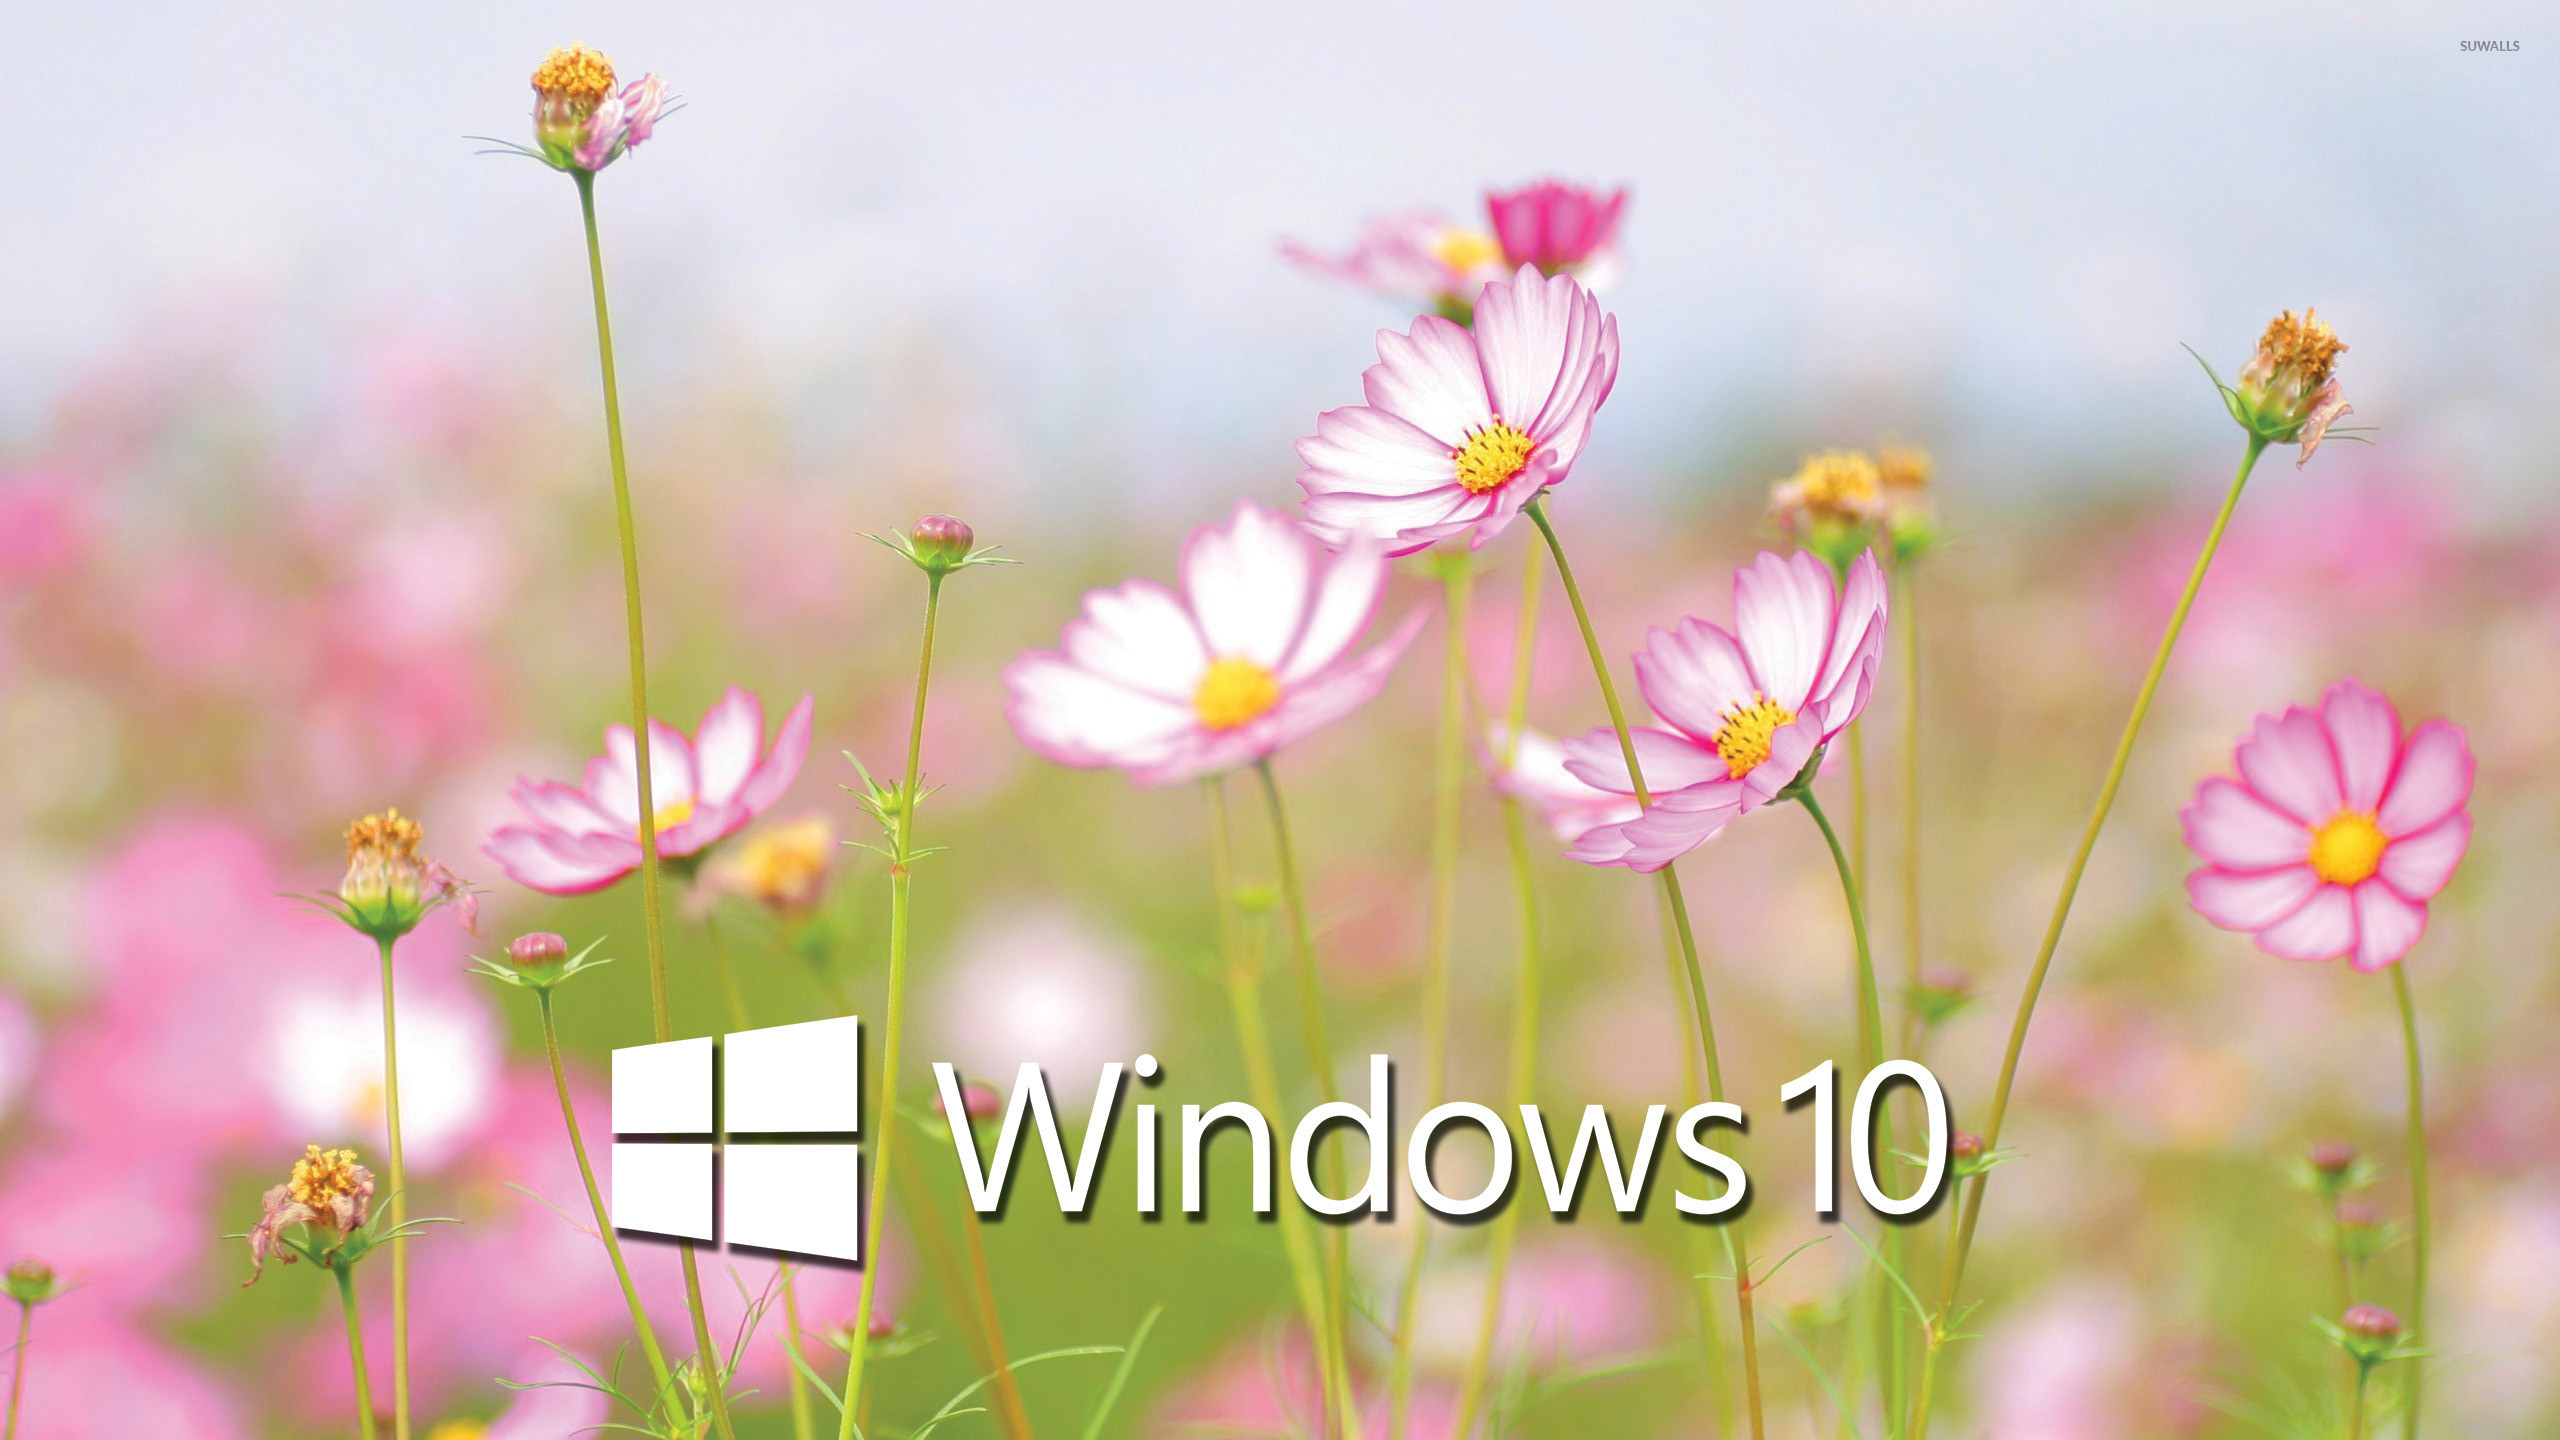 2560x1440 Windows 10 white text logo on cosmos blossoms wallpaper